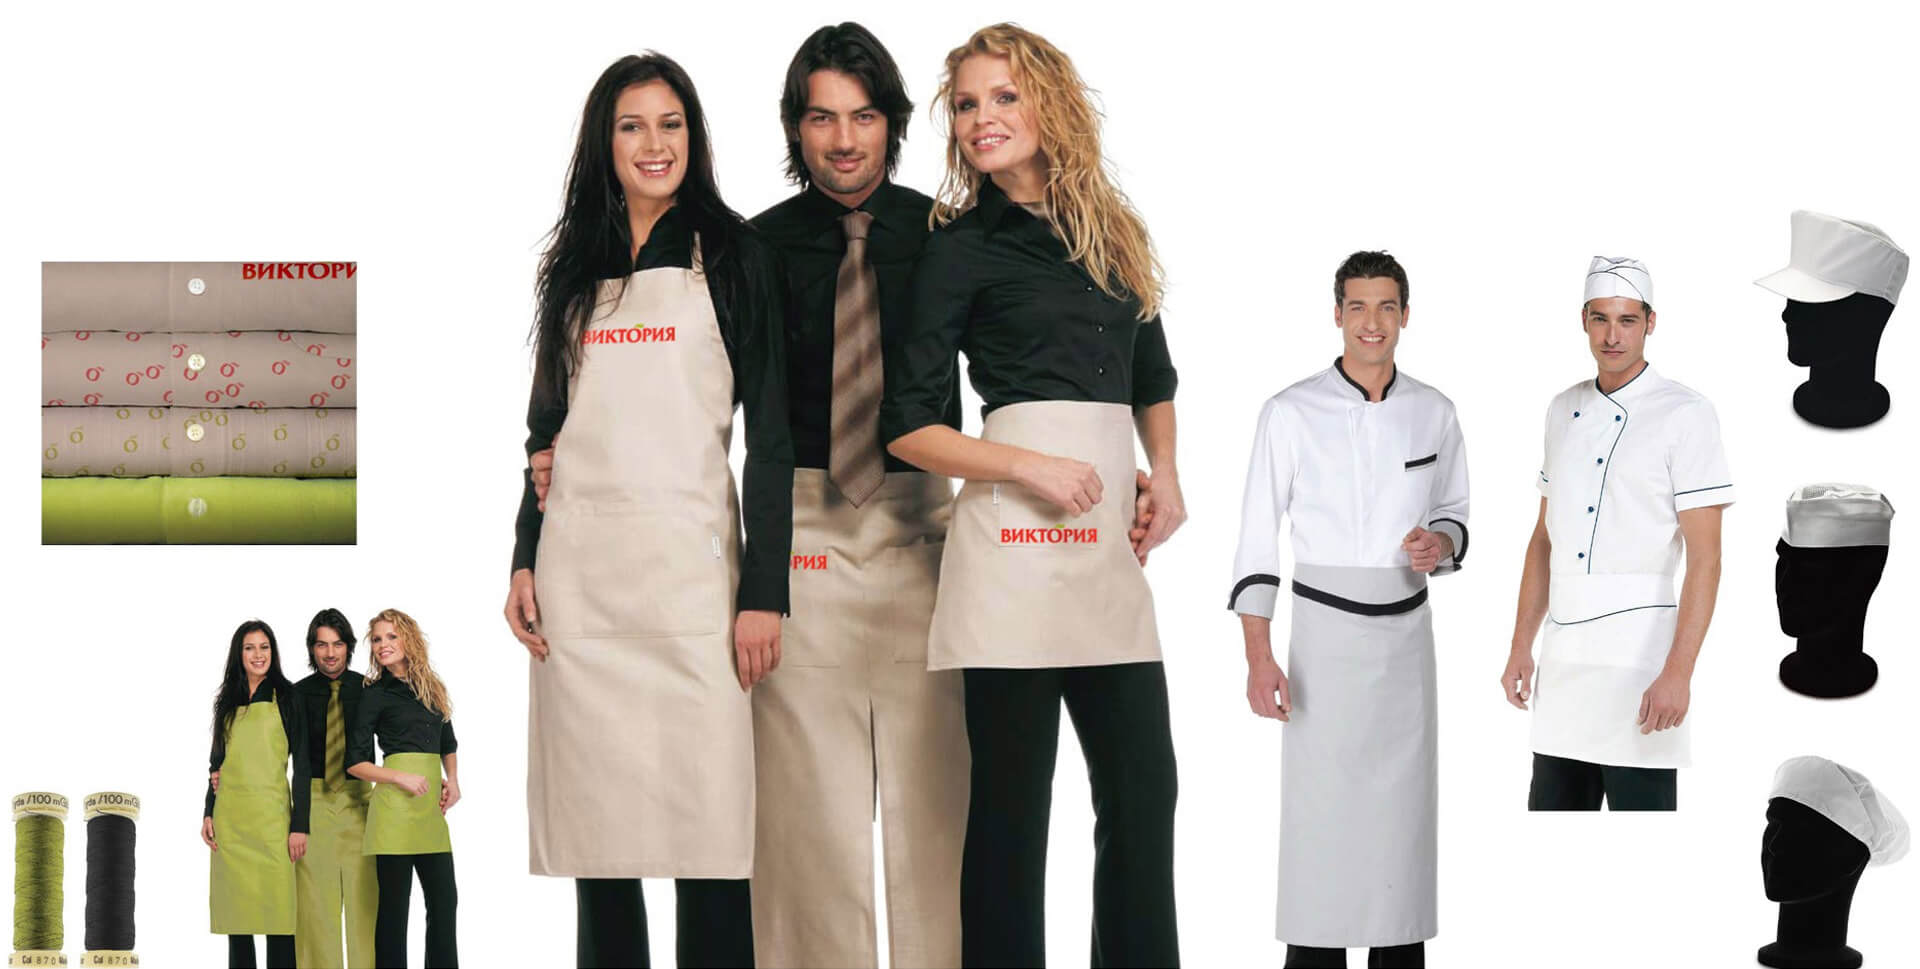 Victoria supermarket branding and staff uniforms